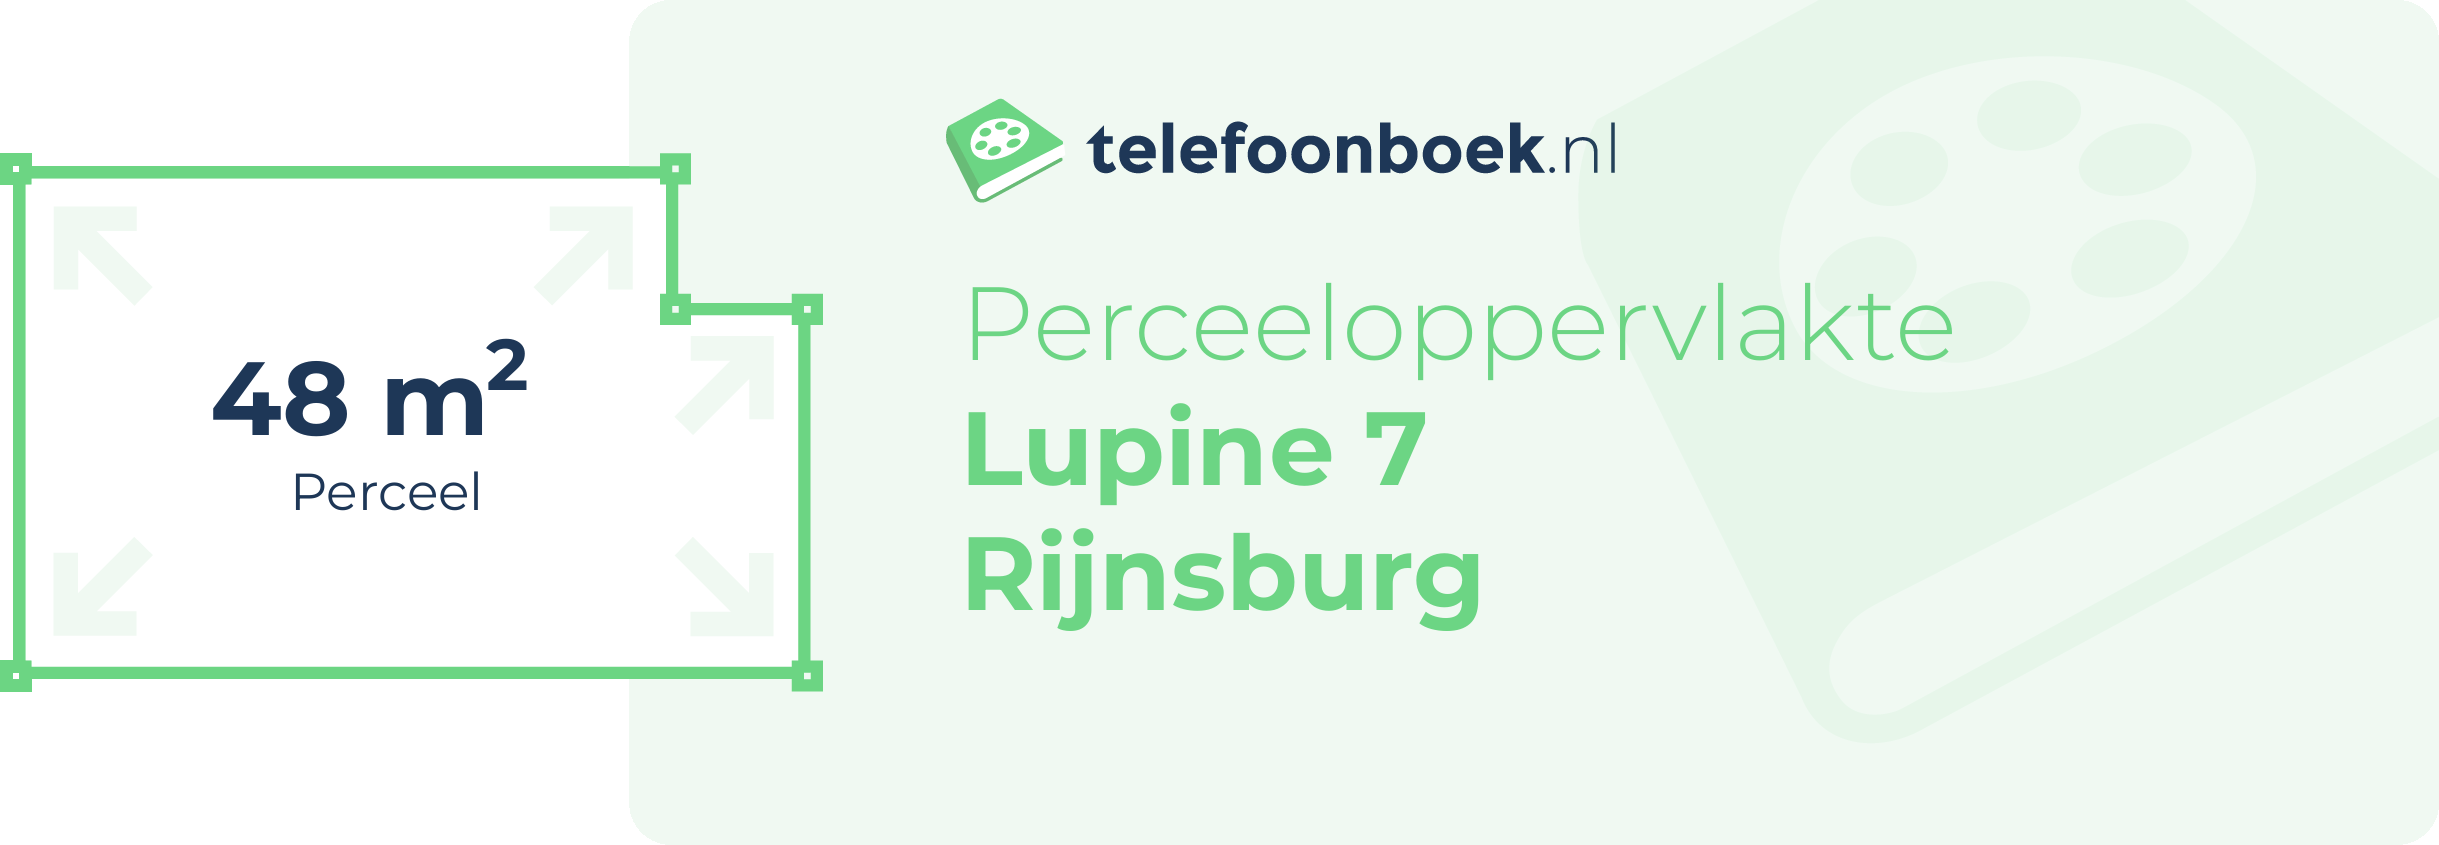 Perceeloppervlakte Lupine 7 Rijnsburg